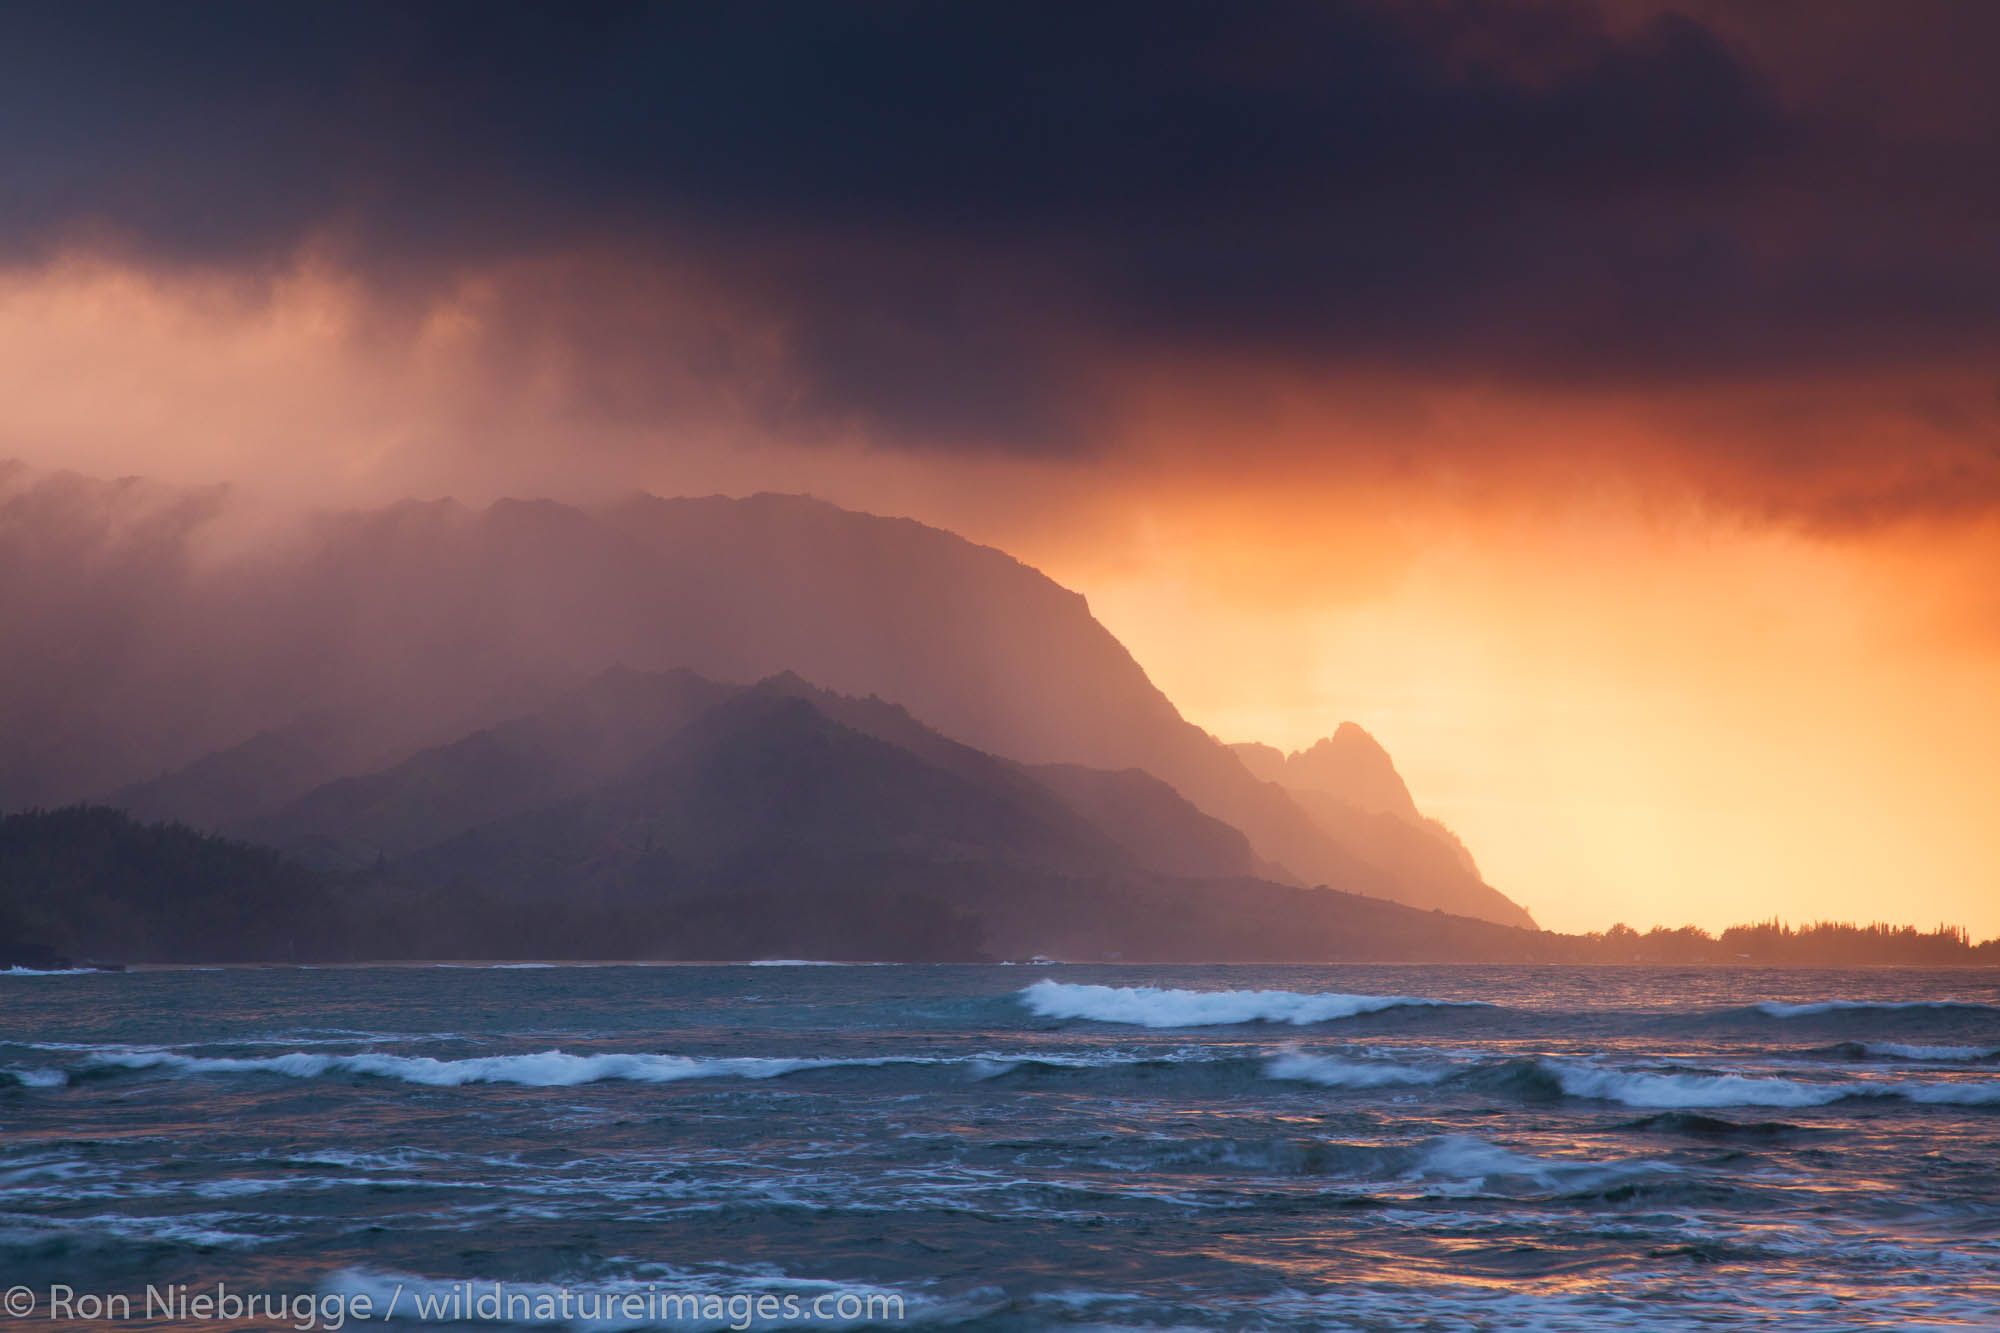 Sunset Hanalei Bay, Looking towards the Na Pali Coast from Hanalei Bay, Kauai, Hawaii.